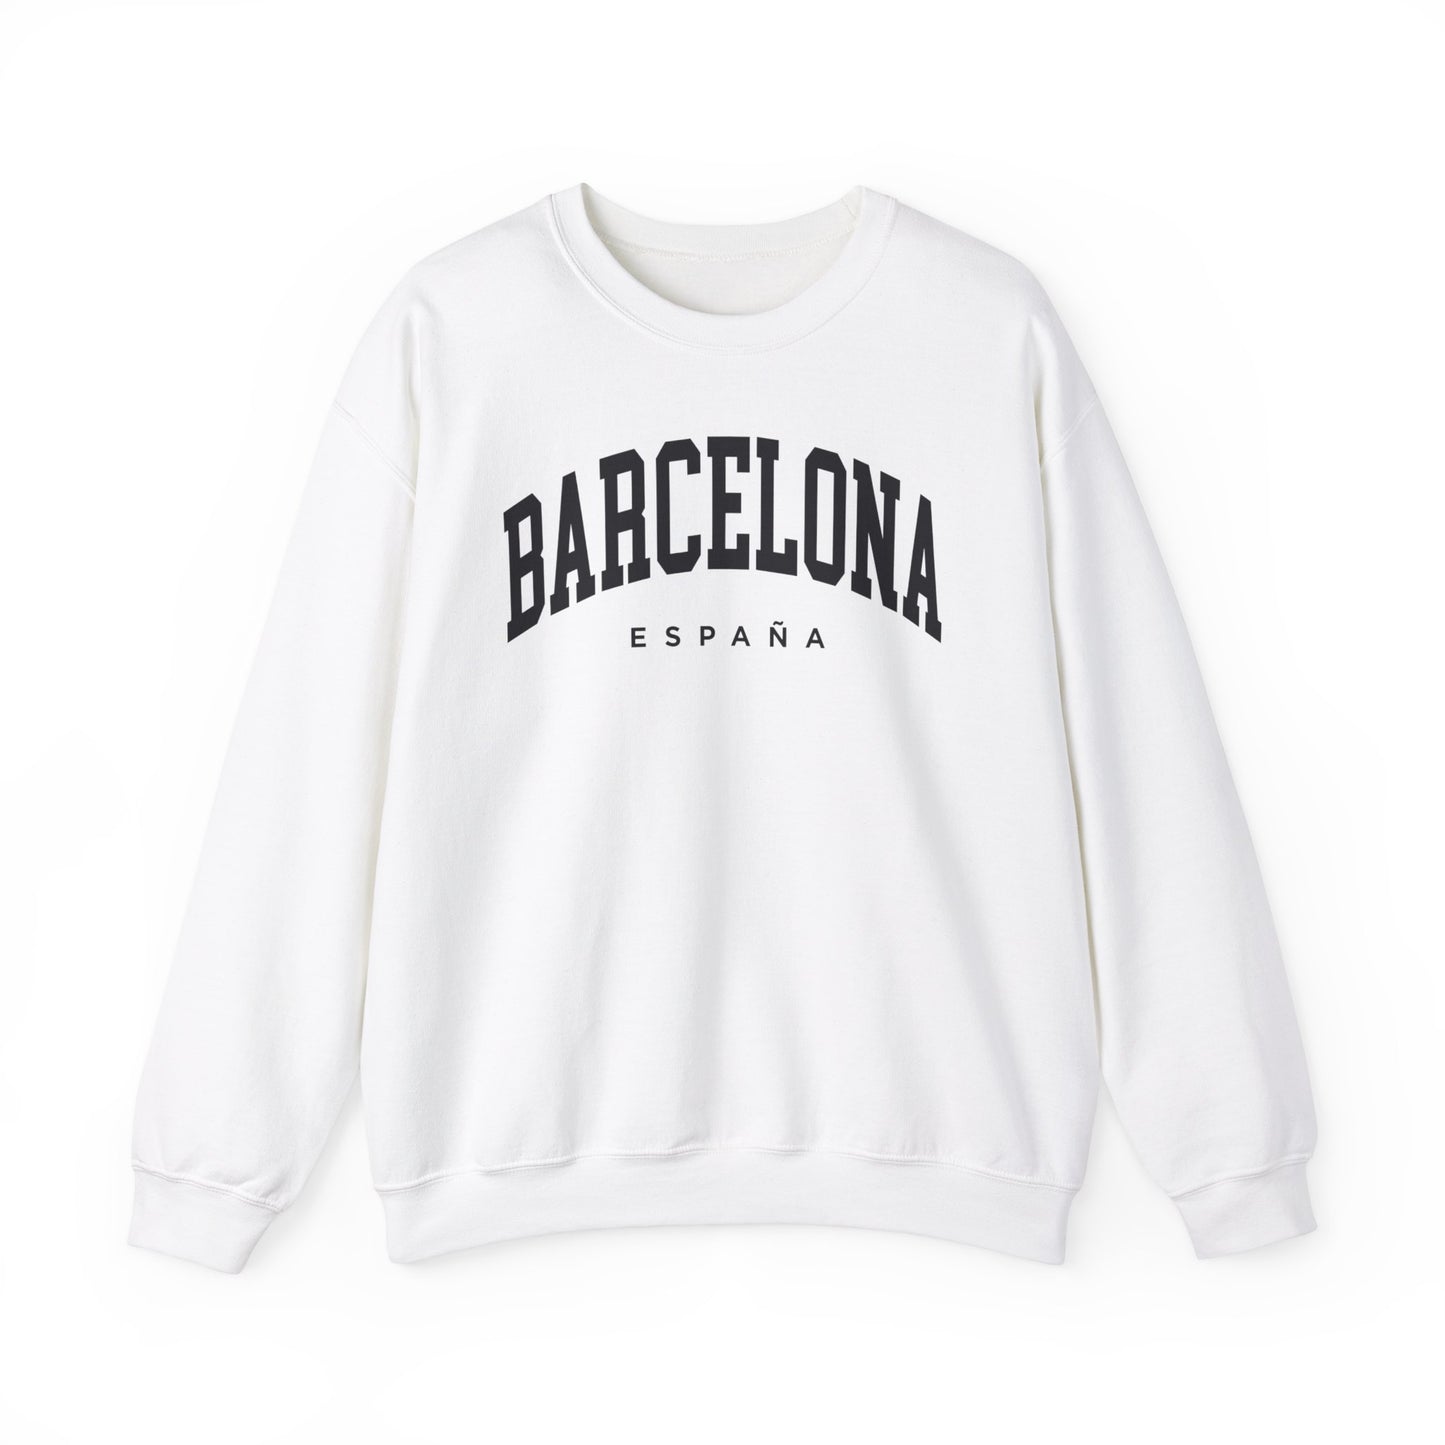 Barcelona Spain Sweatshirt